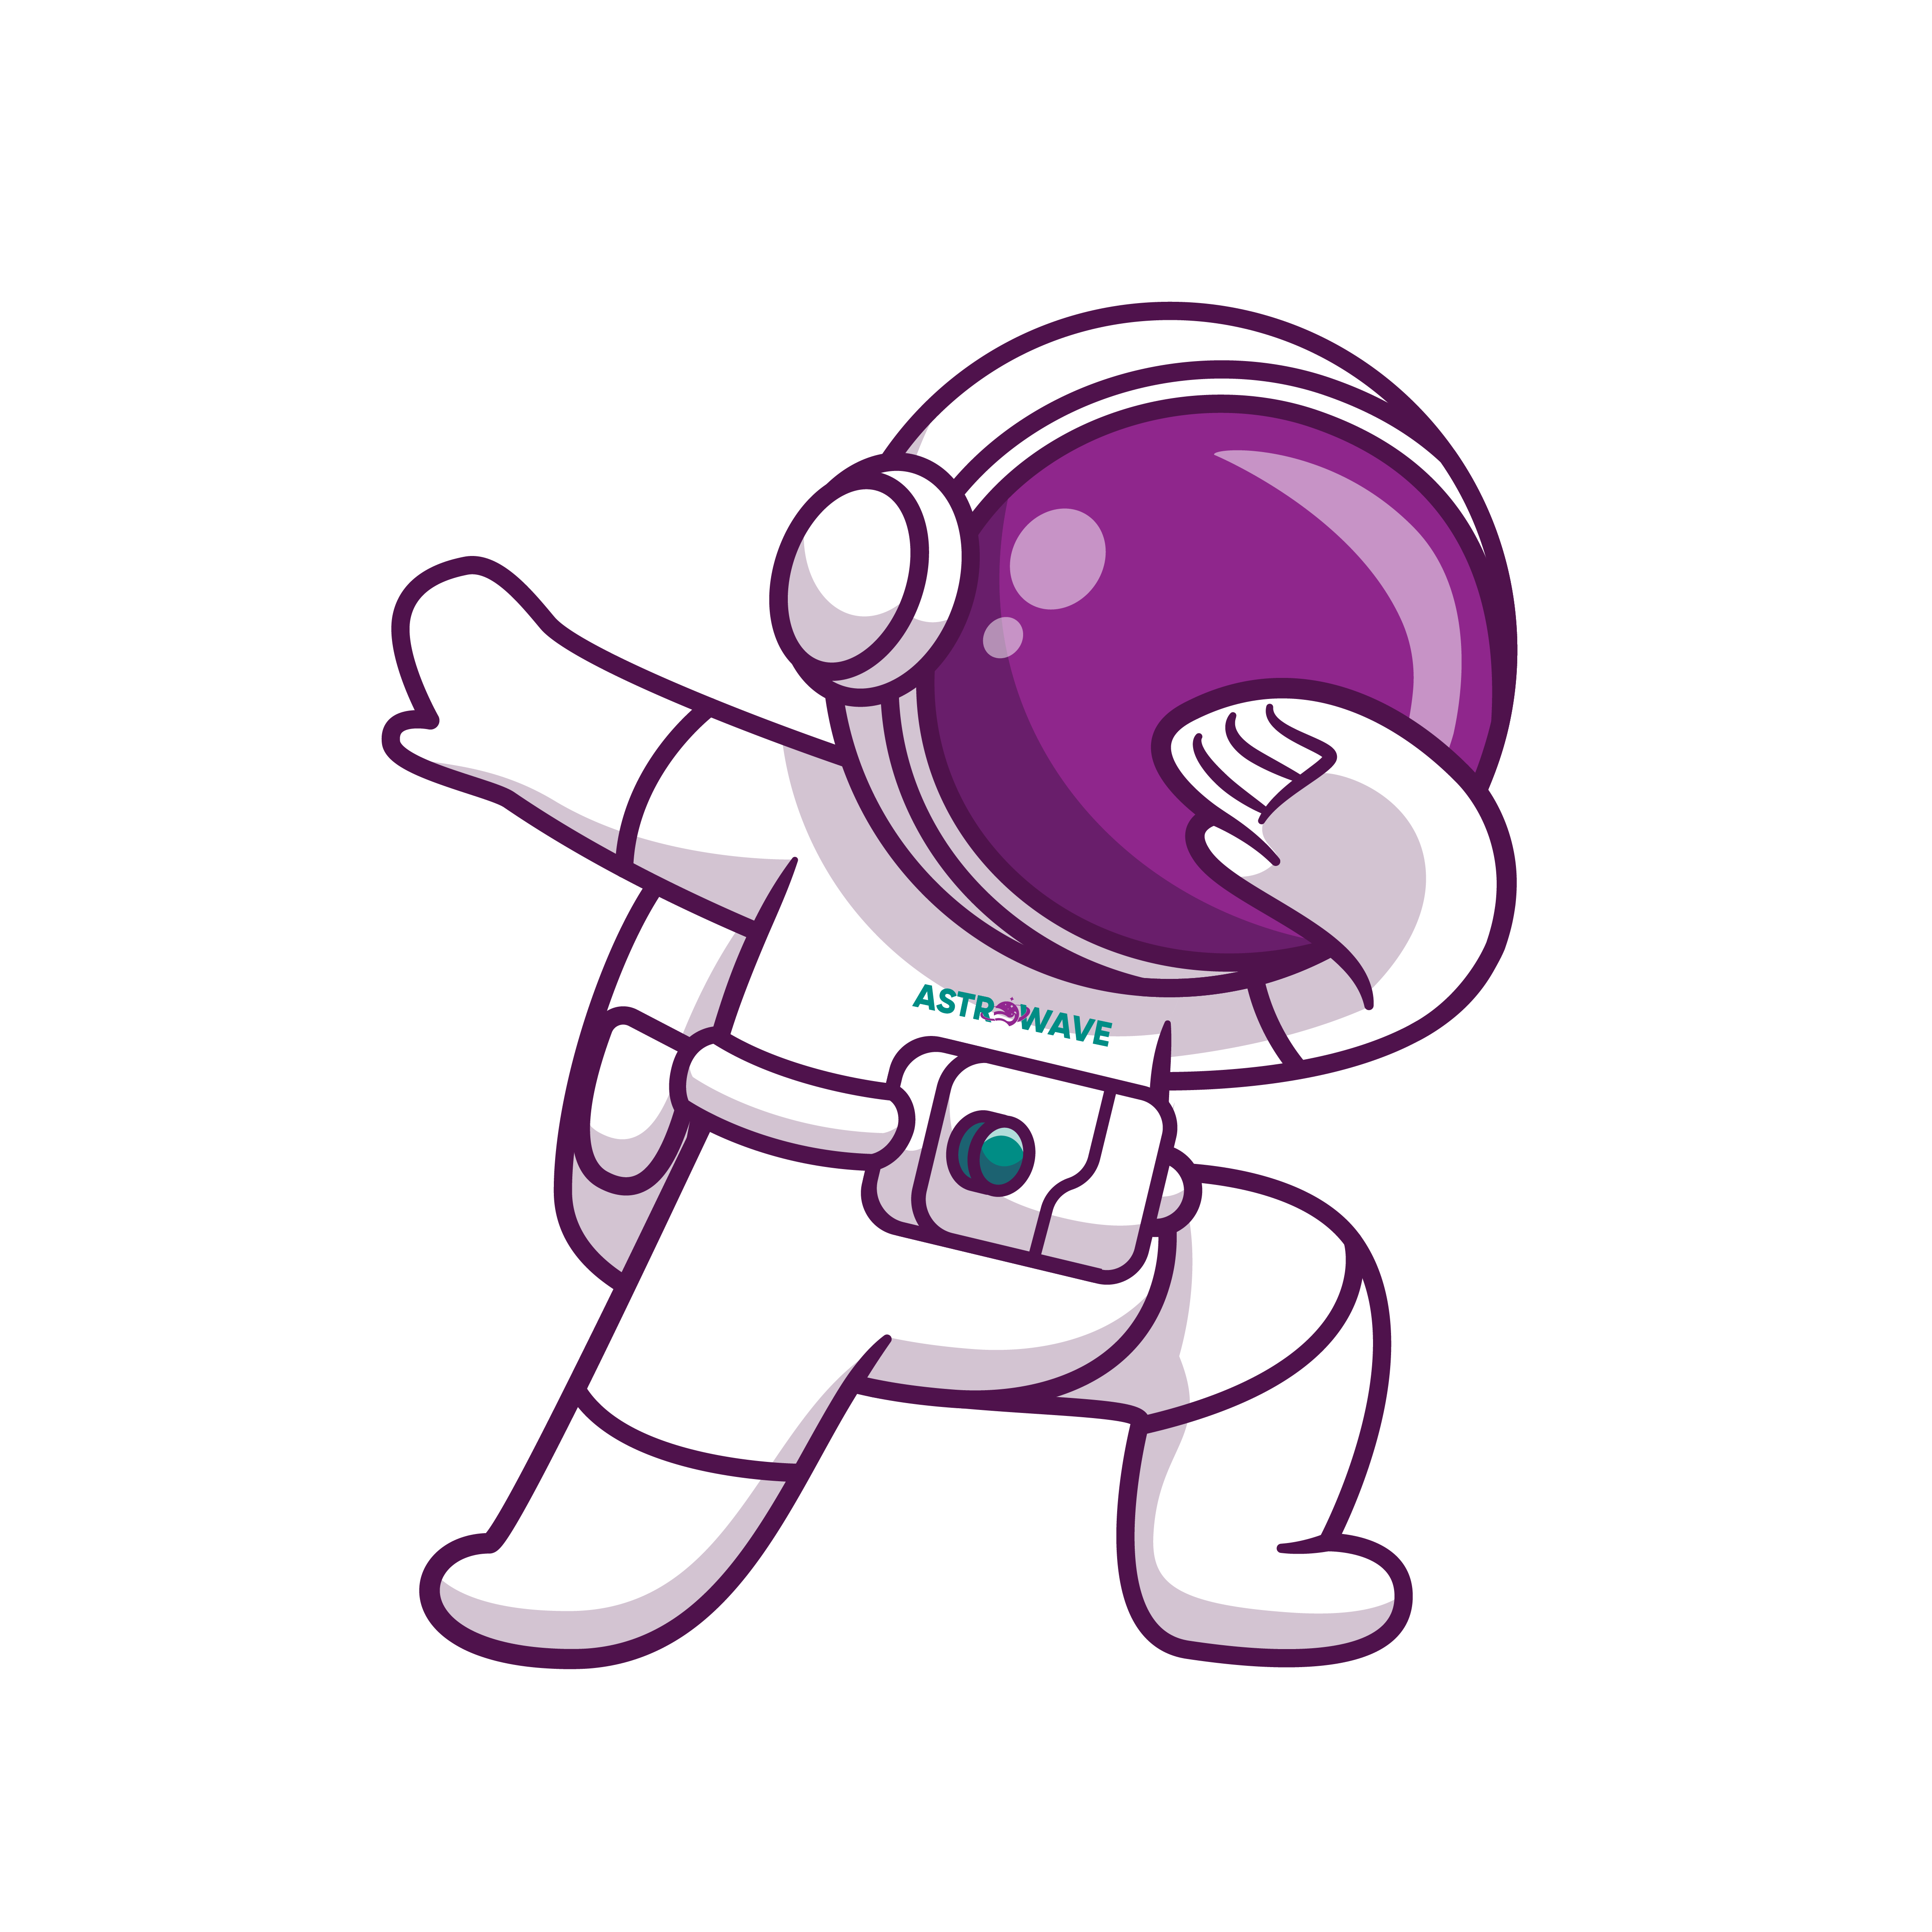 Astrowave astronaut dabbing pose